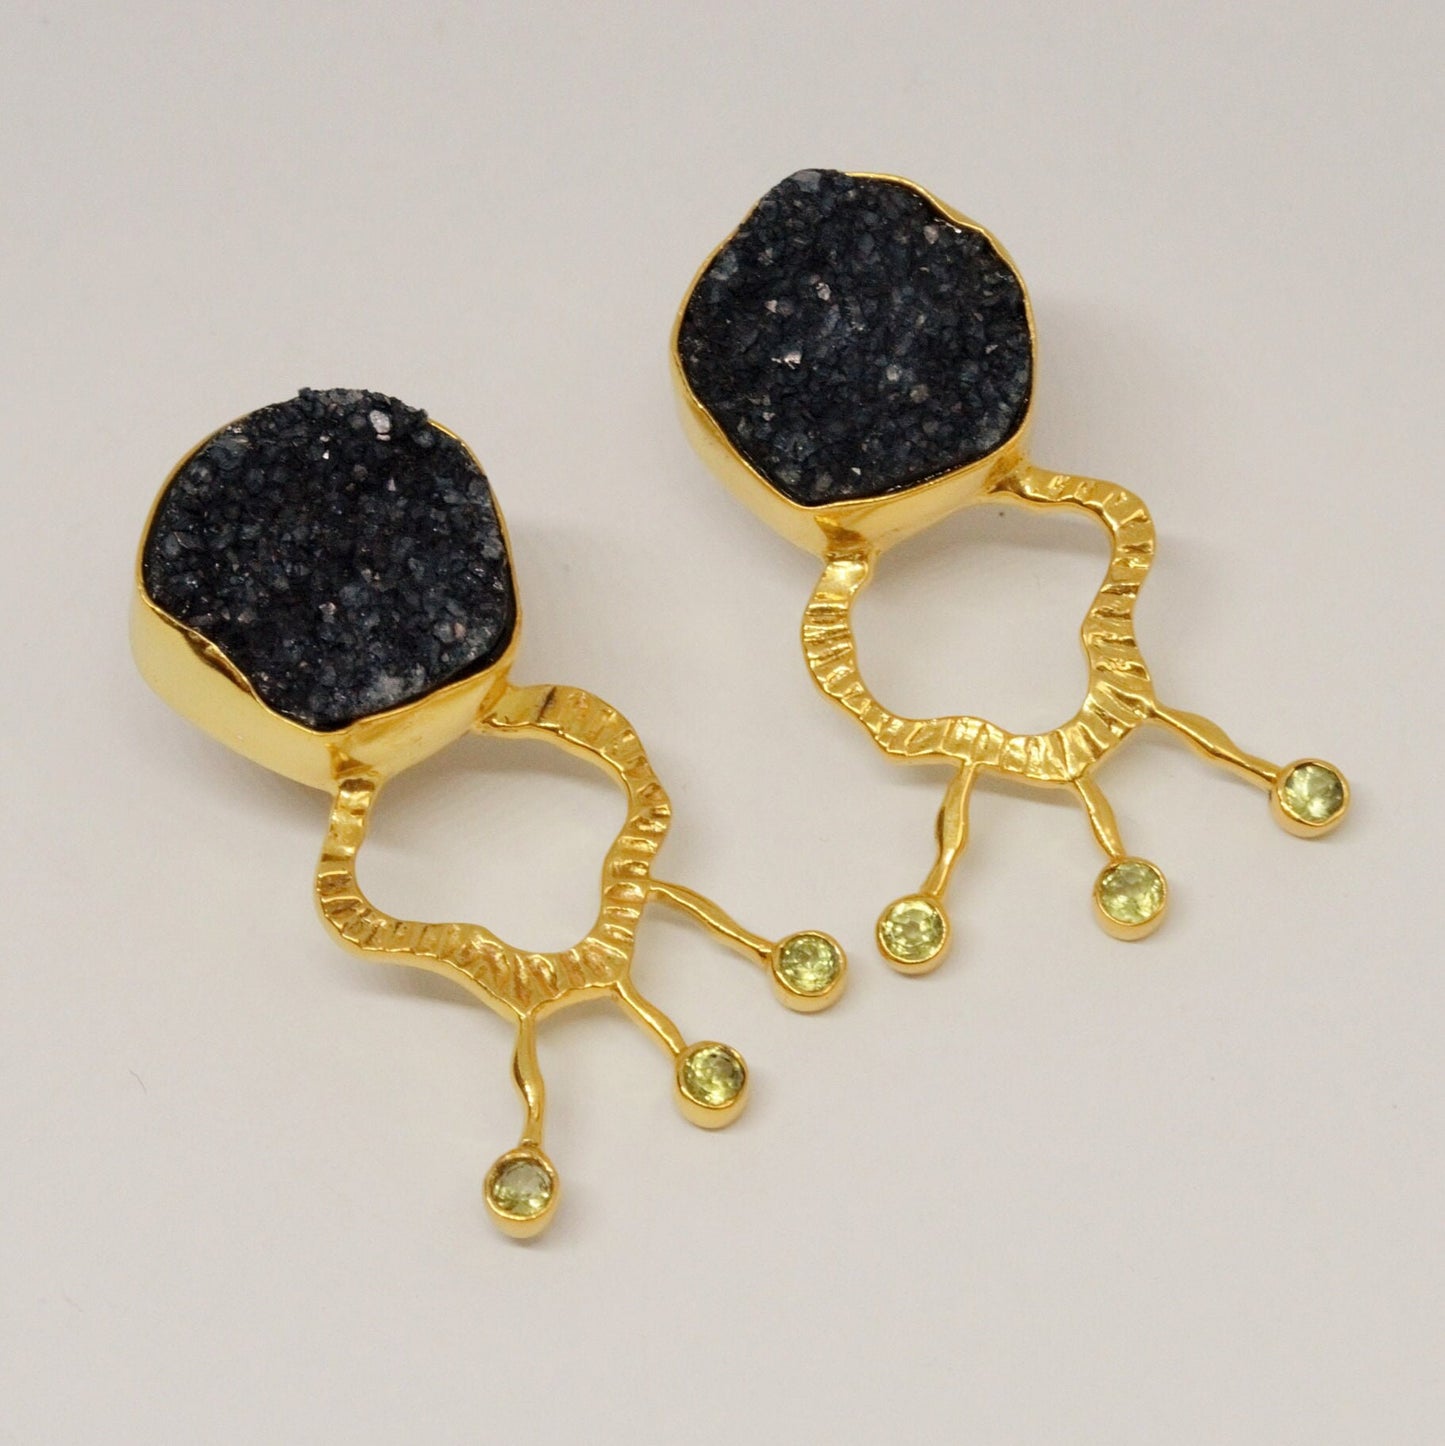 Black Agate, Peridot Gold Earrings, Druzy Earrings, August Birthstone, Peridot Jewelry, Statement Gemstone Earrings, Gift for her